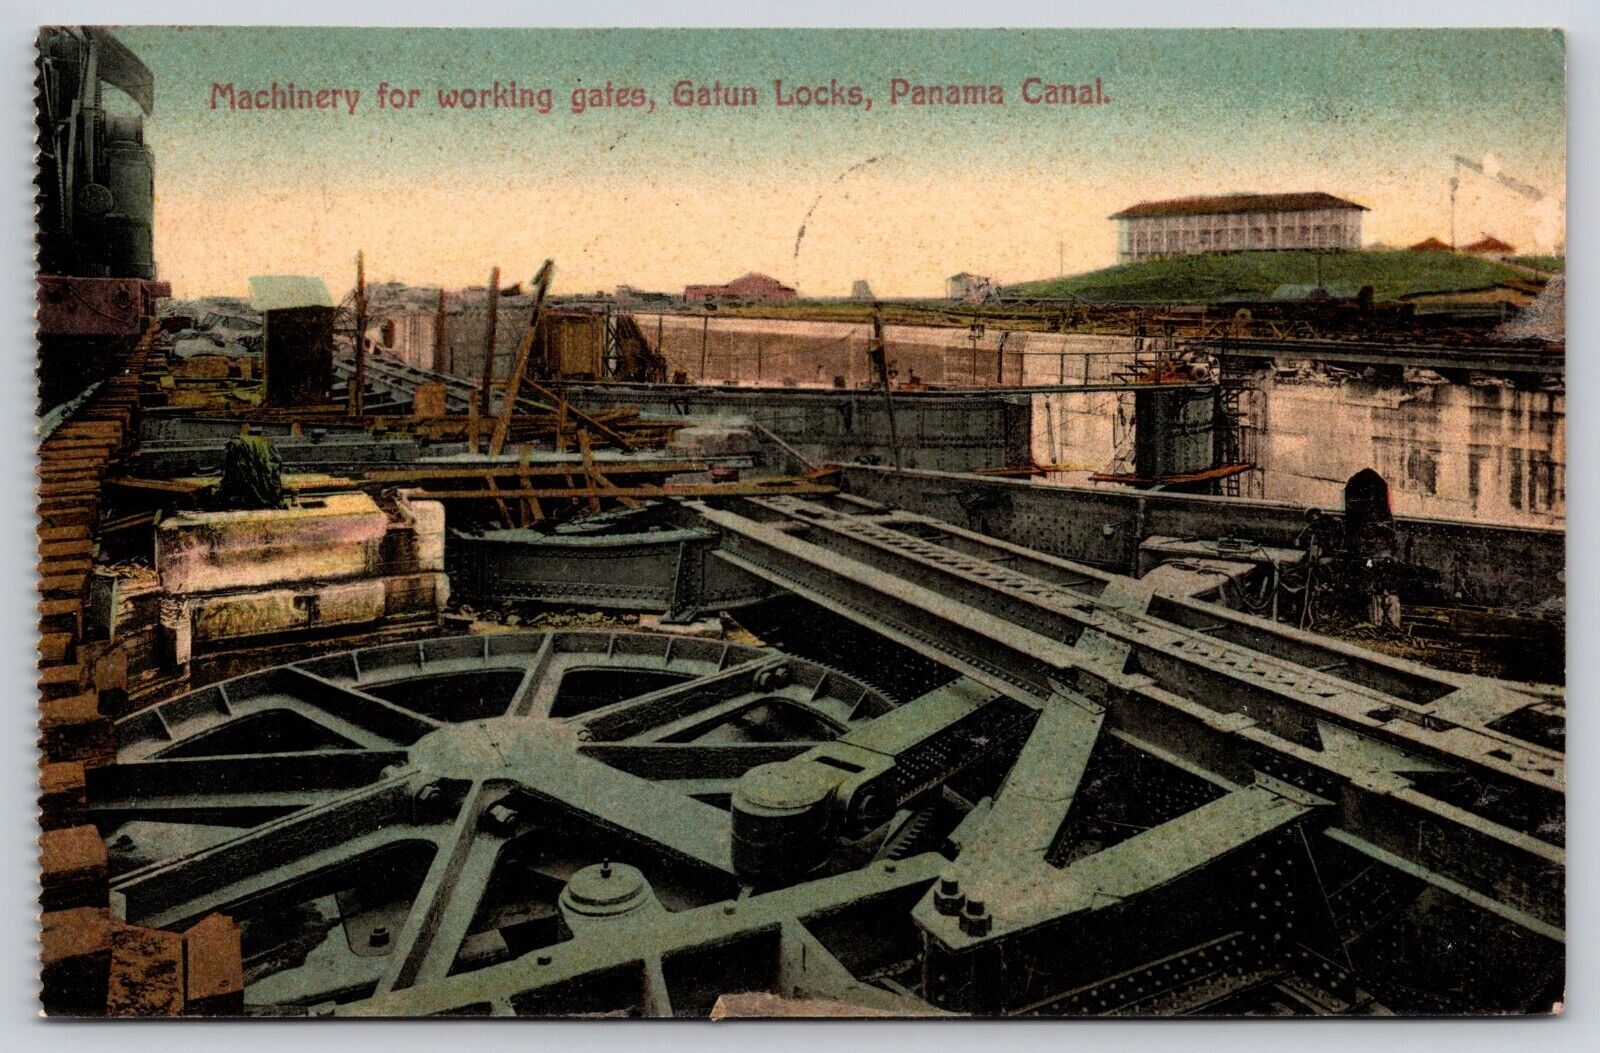 Panama Canal Machinery for Working Gates Gatun Locks 1913 Postcard A1